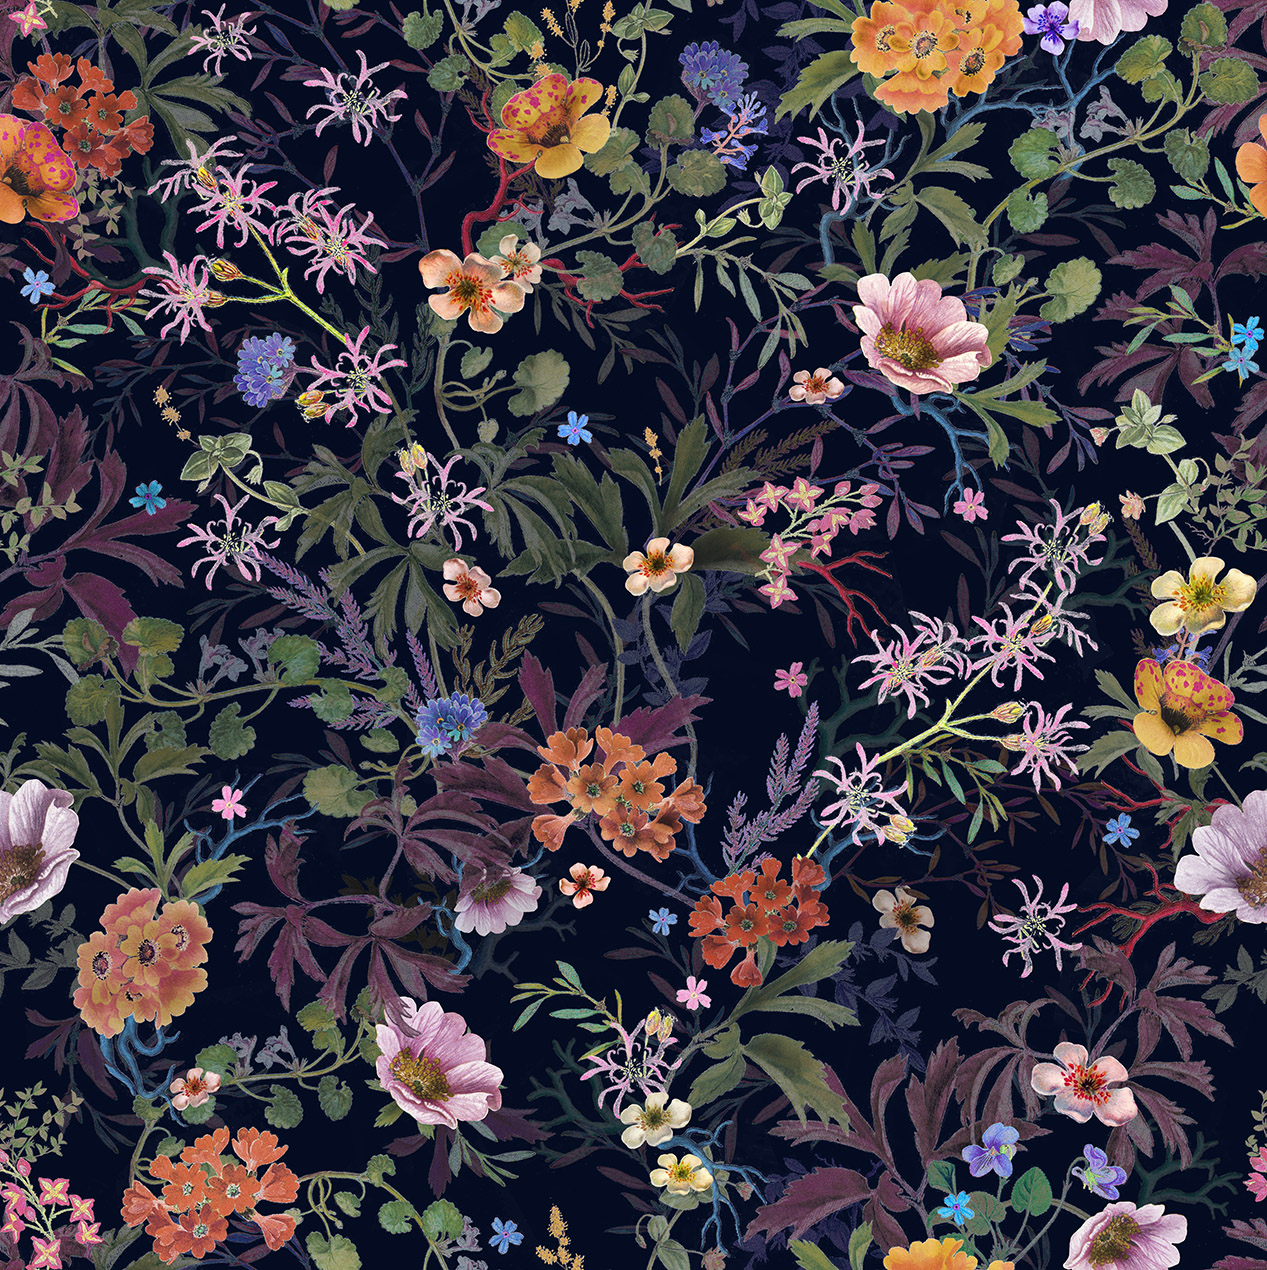 Dark winter botanical floral print for Fiorelli, by Em Prov